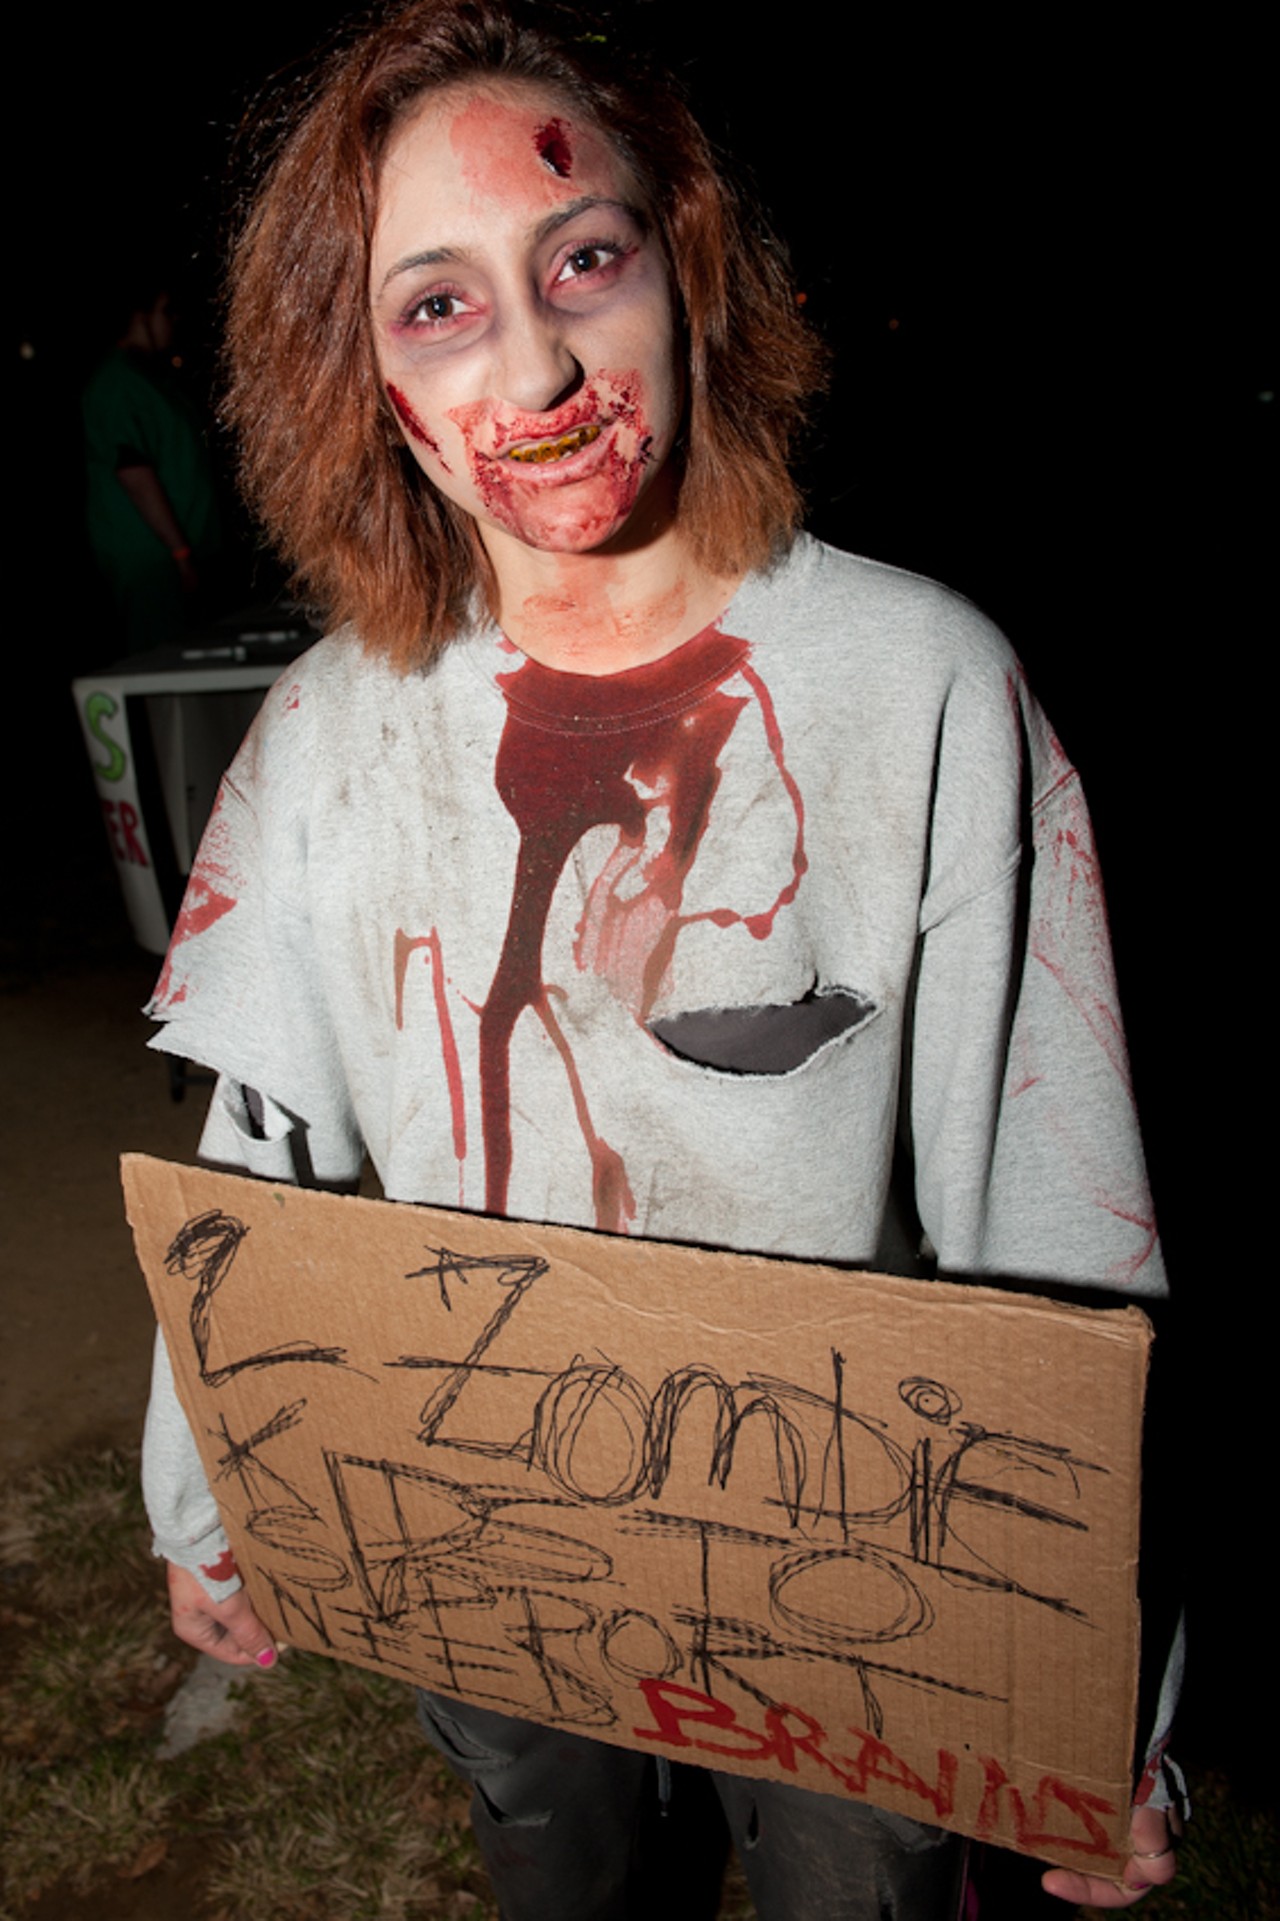 The 2013 St. Louis Zombie Walk